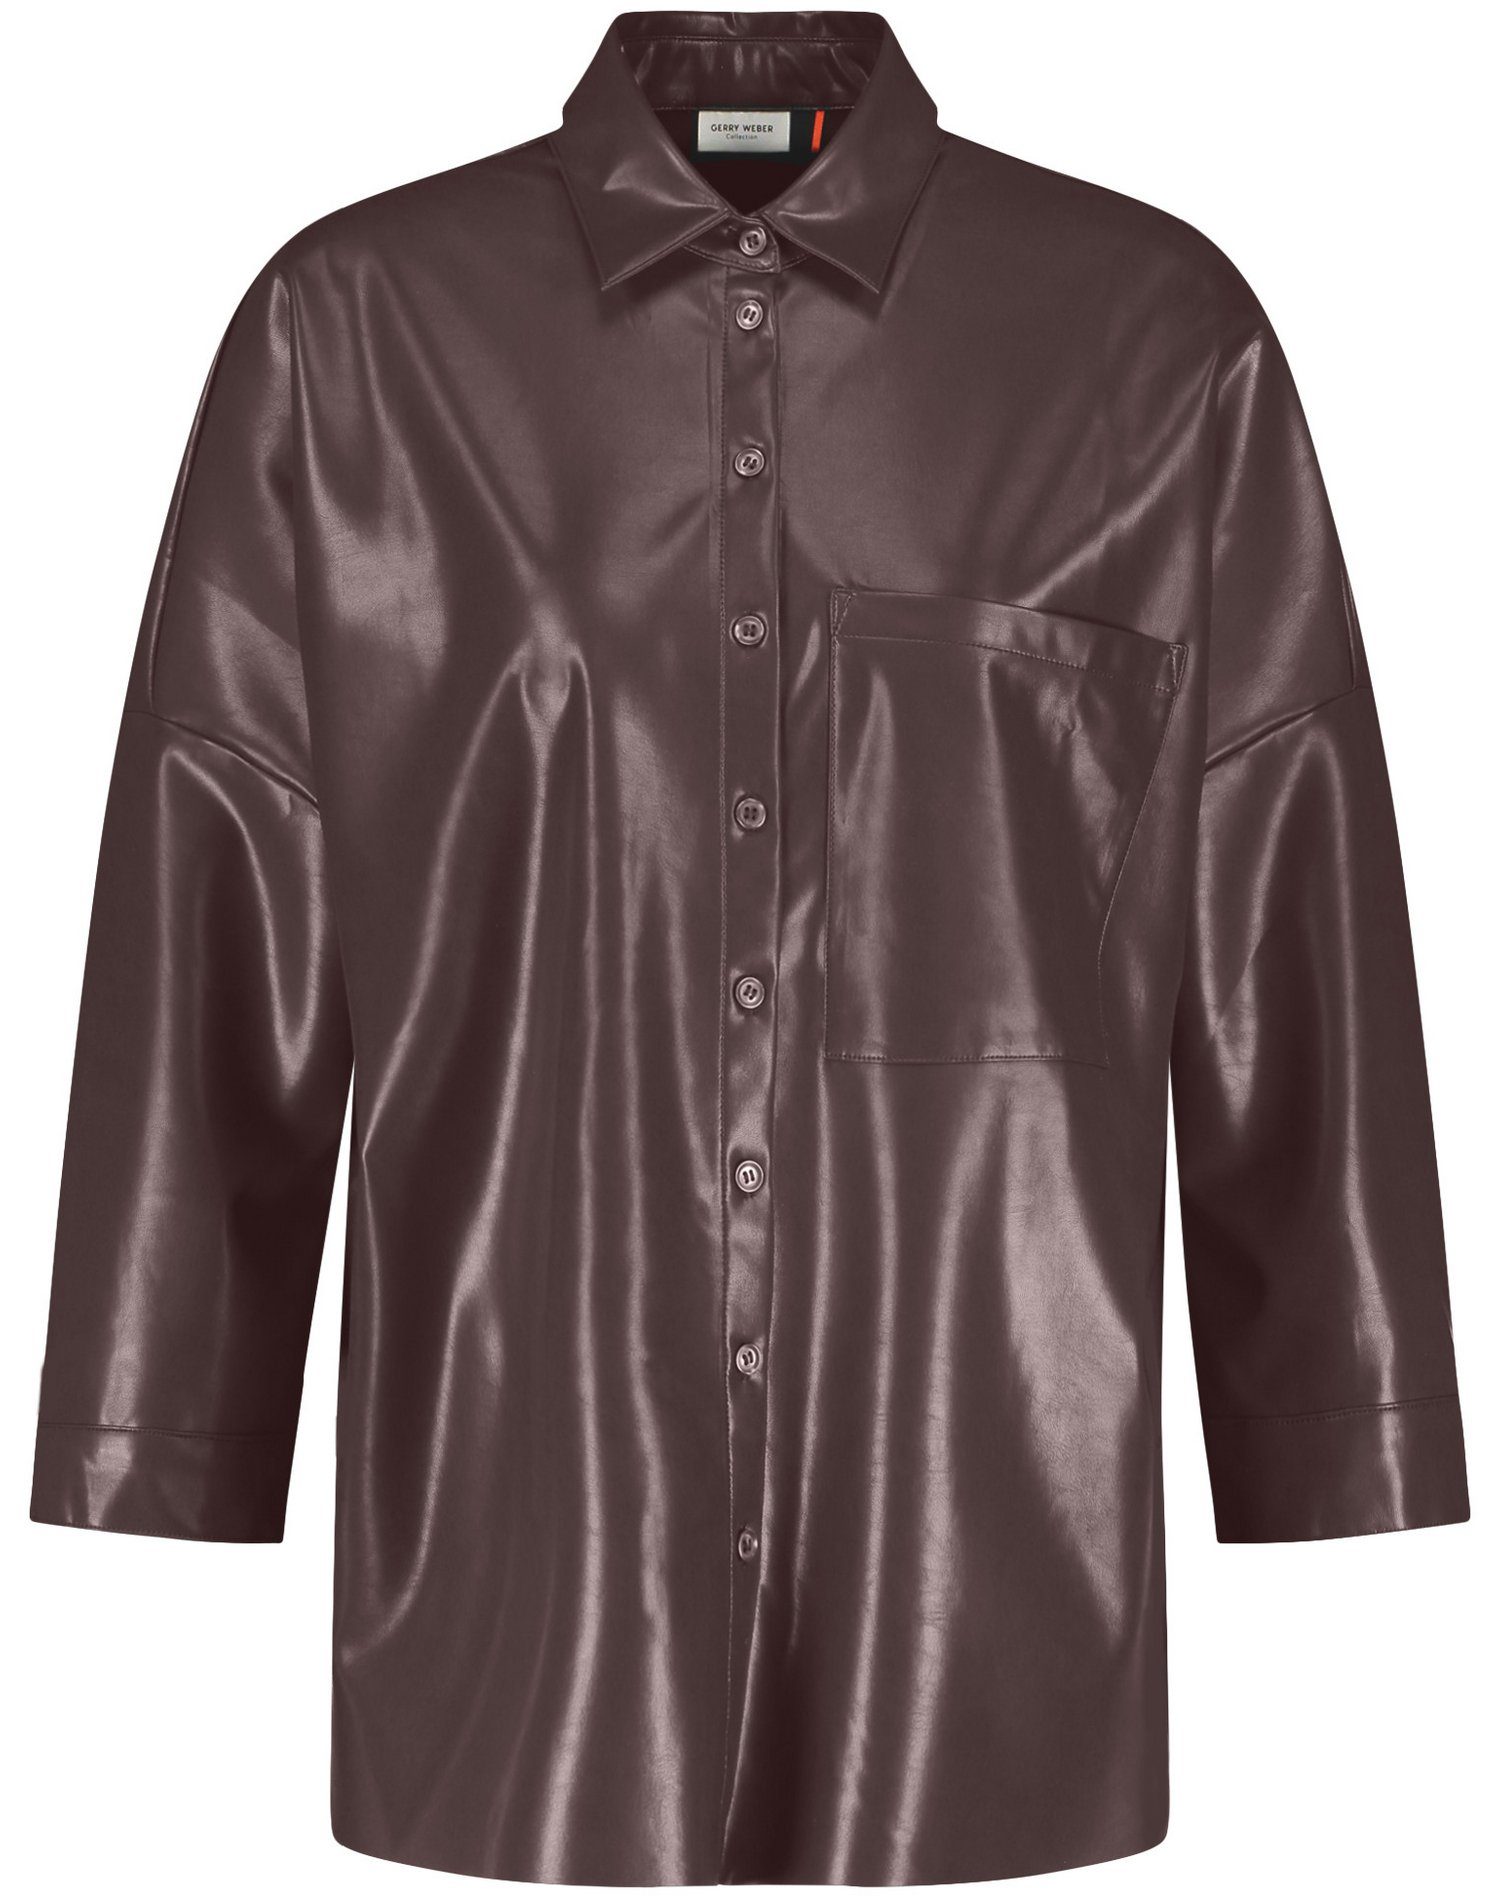 Damen Blusen GERRY WEBER Klassische Bluse Hemd aus Kunstleder Oversize